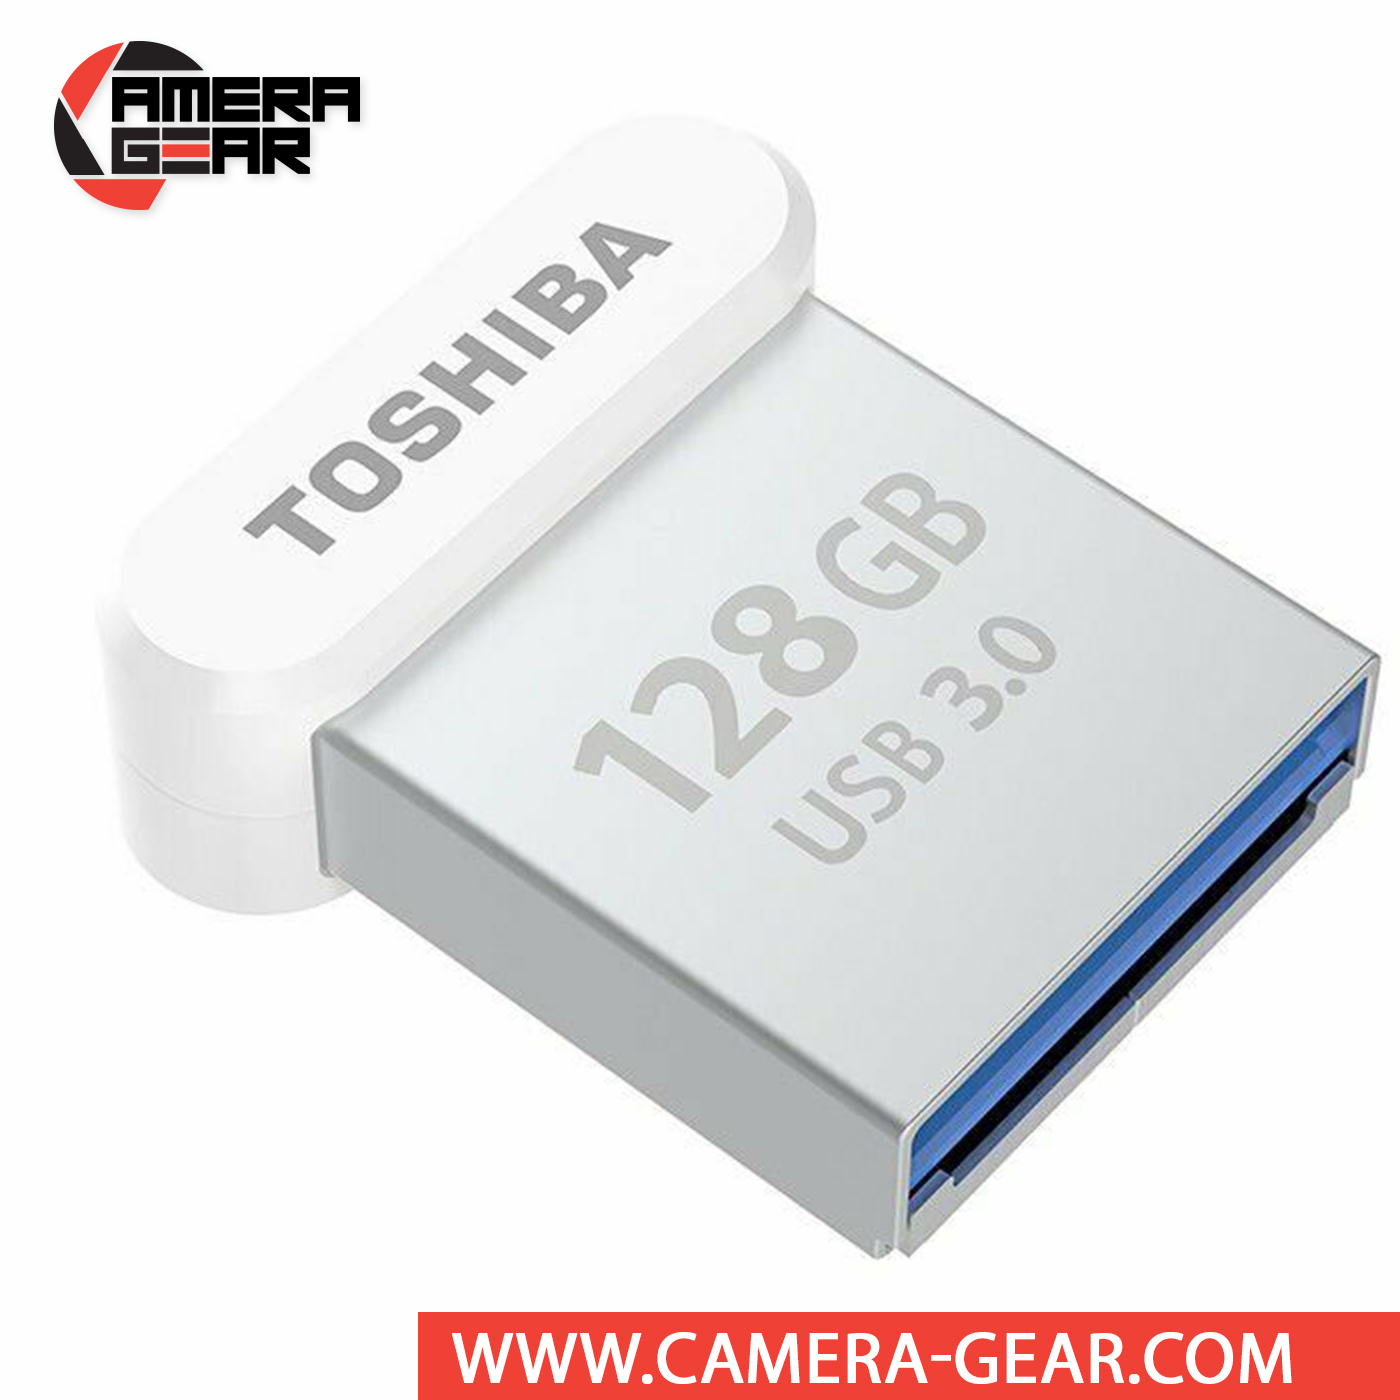 Флешки 128 гб 3.0. Флешка 128 ГБ. Флешка для телефона 128 ГБ. Toshiba флеш. Флешка 128 ГБ при открытии белой экран.